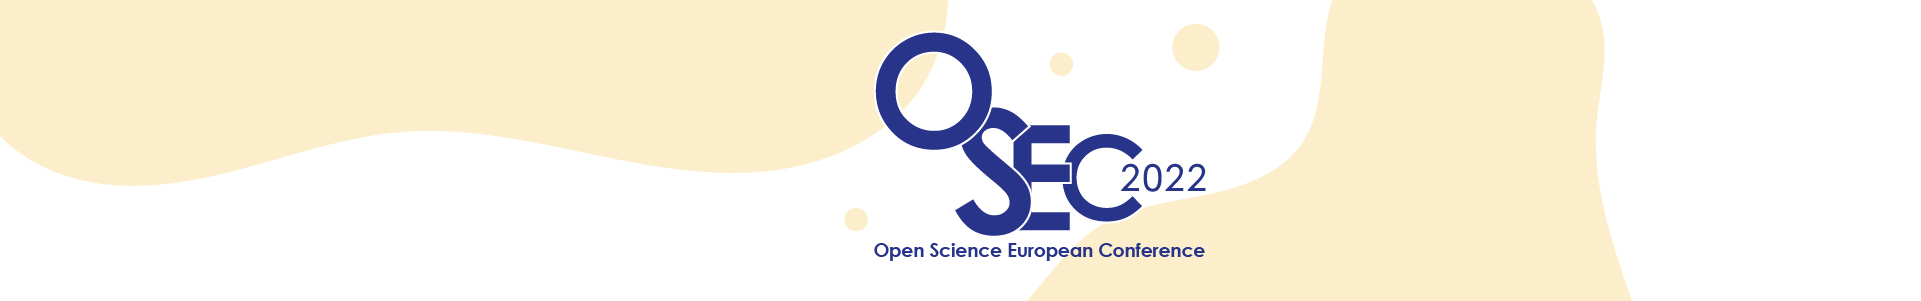 Paris Open Science European Conference (OSEC)